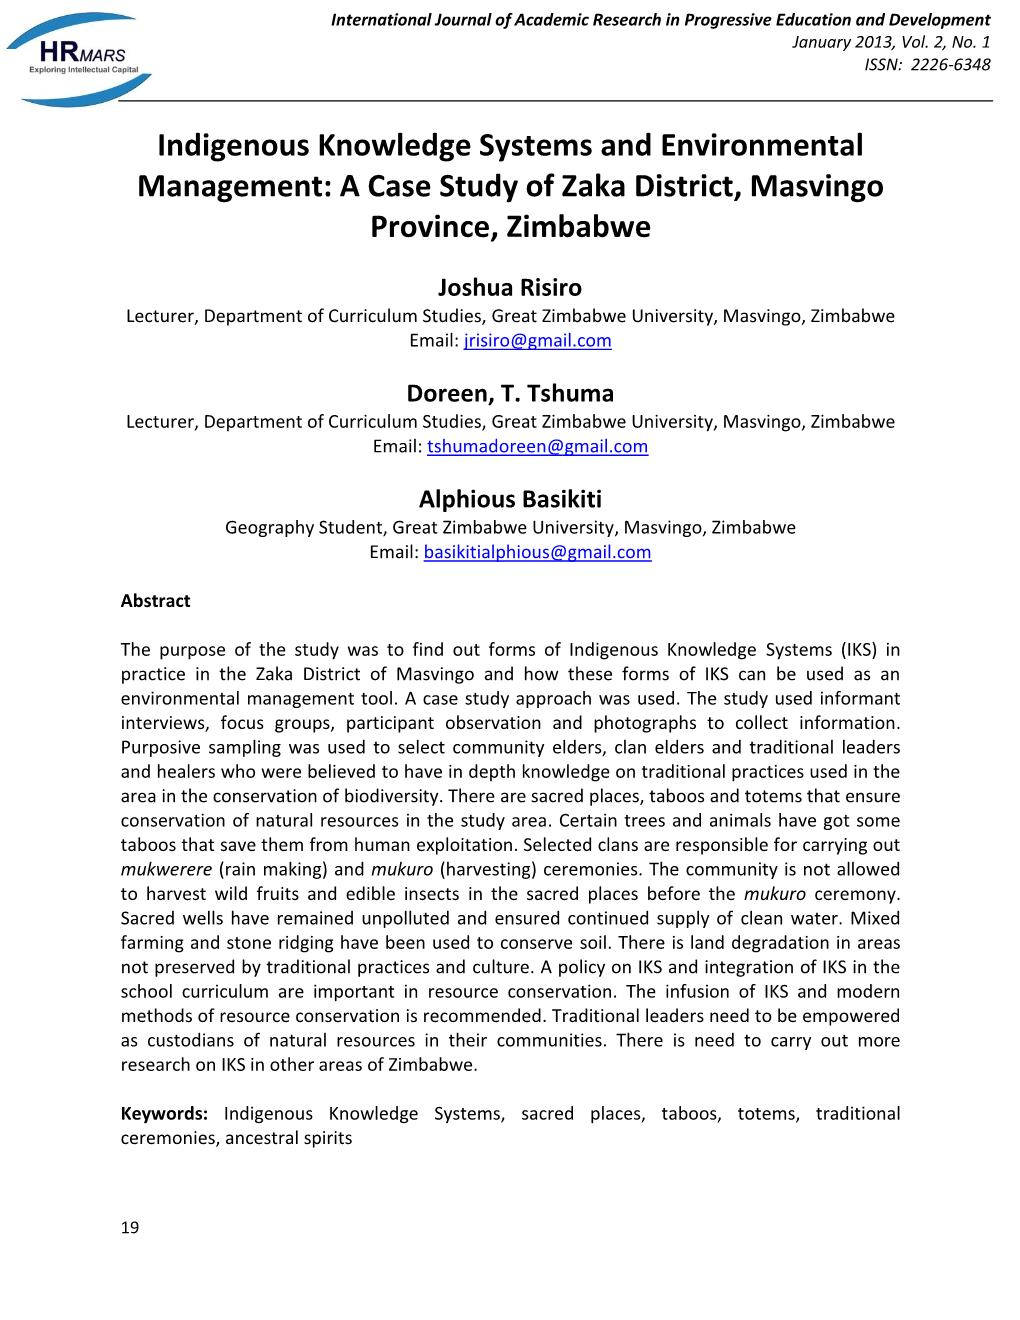 Indigenous Knowledge Systems and Environmental Management: a Case Study of Zaka District, Masvingo Province, Zimbabwe